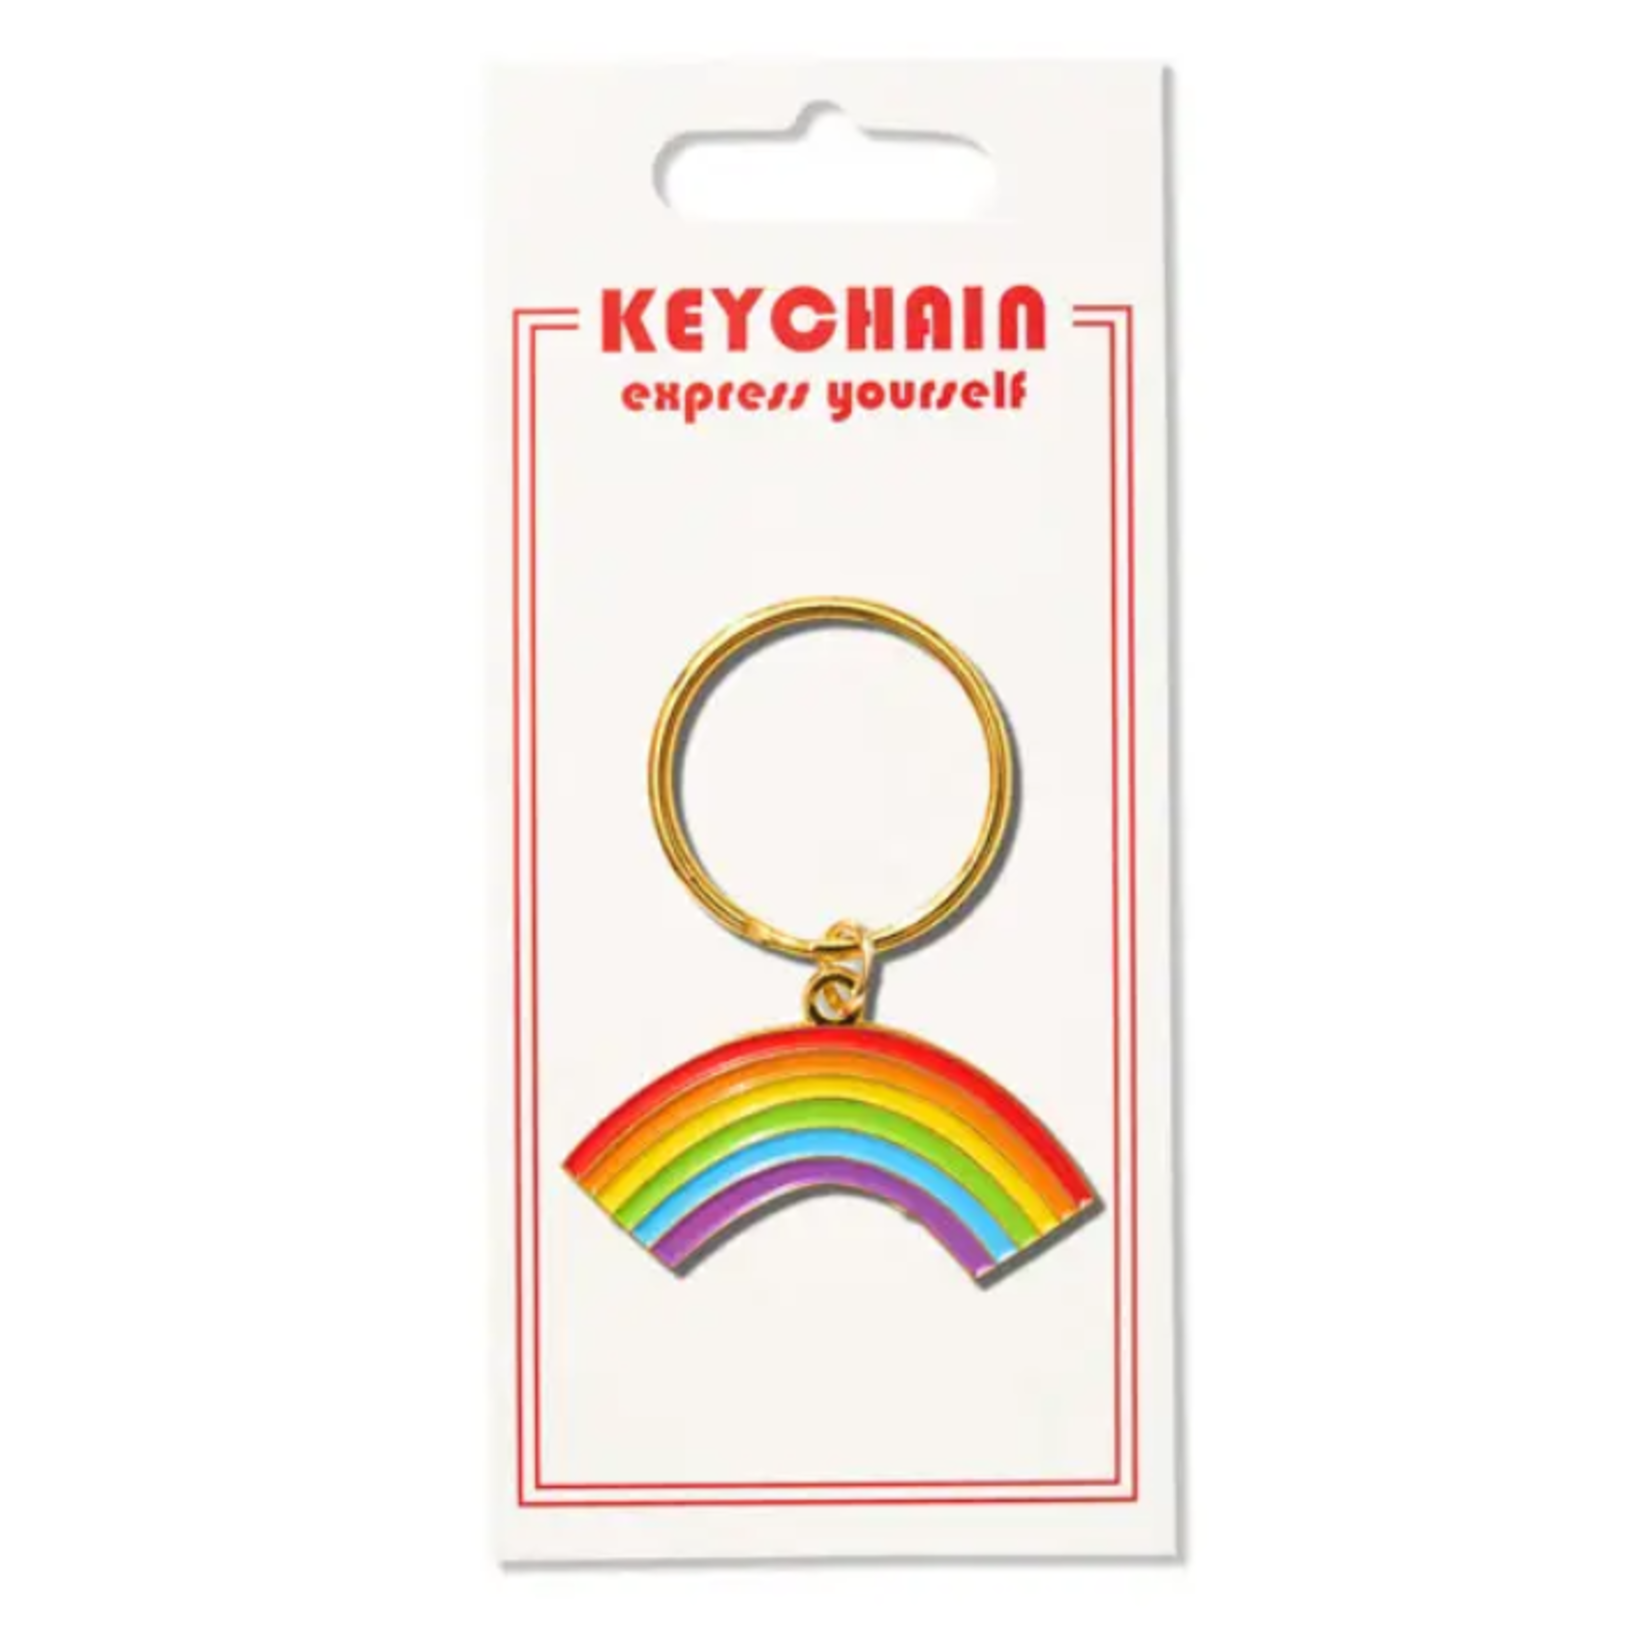 The Found Rainbow Keychain